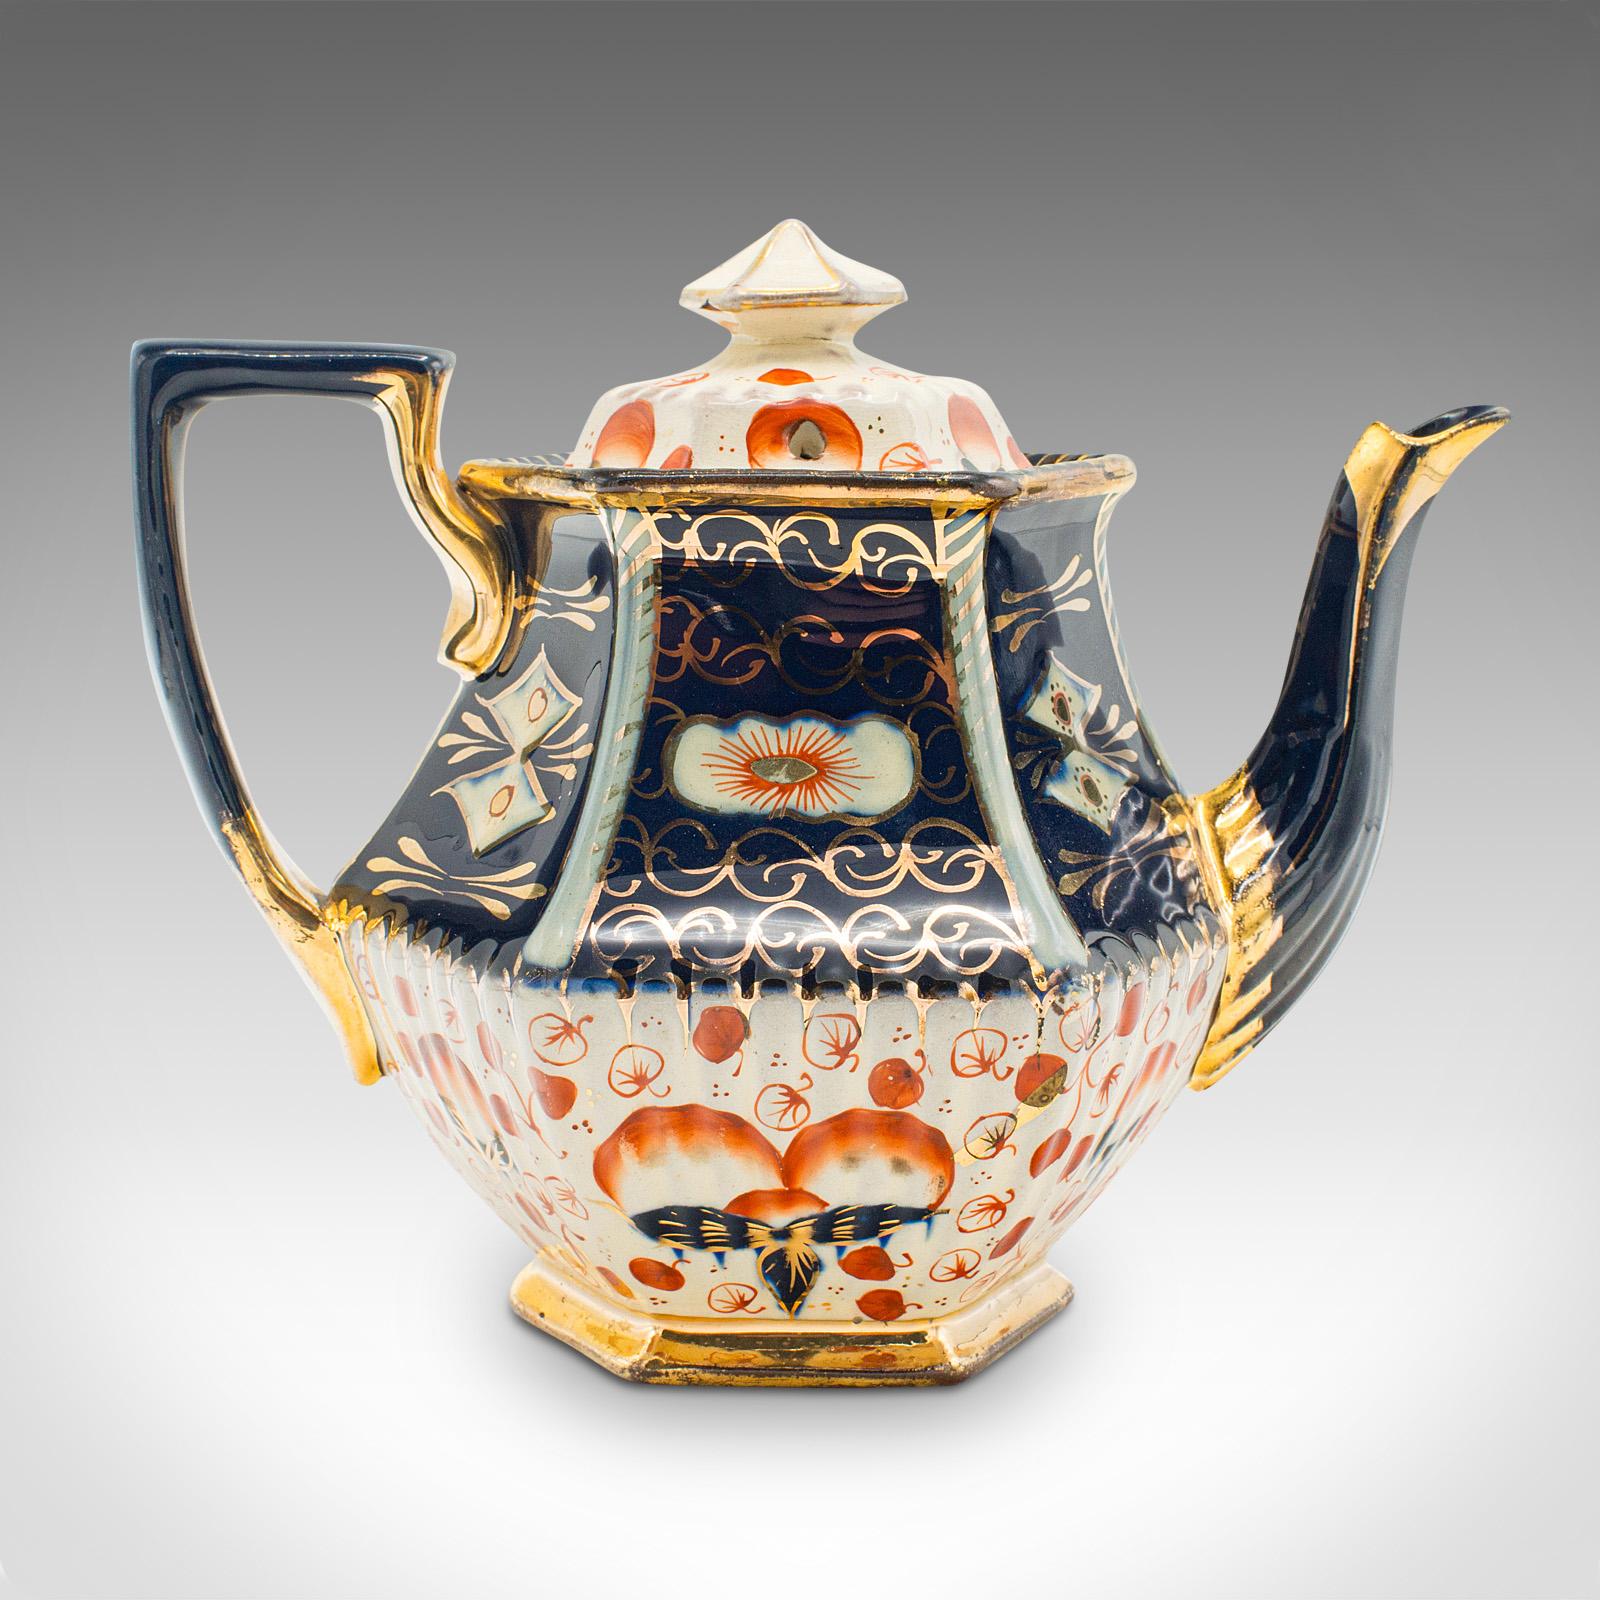 Antique Imari Pattern Teapot, English, Ceramic, Decorative Tea Kettle, Victorian In Good Condition For Sale In Hele, Devon, GB